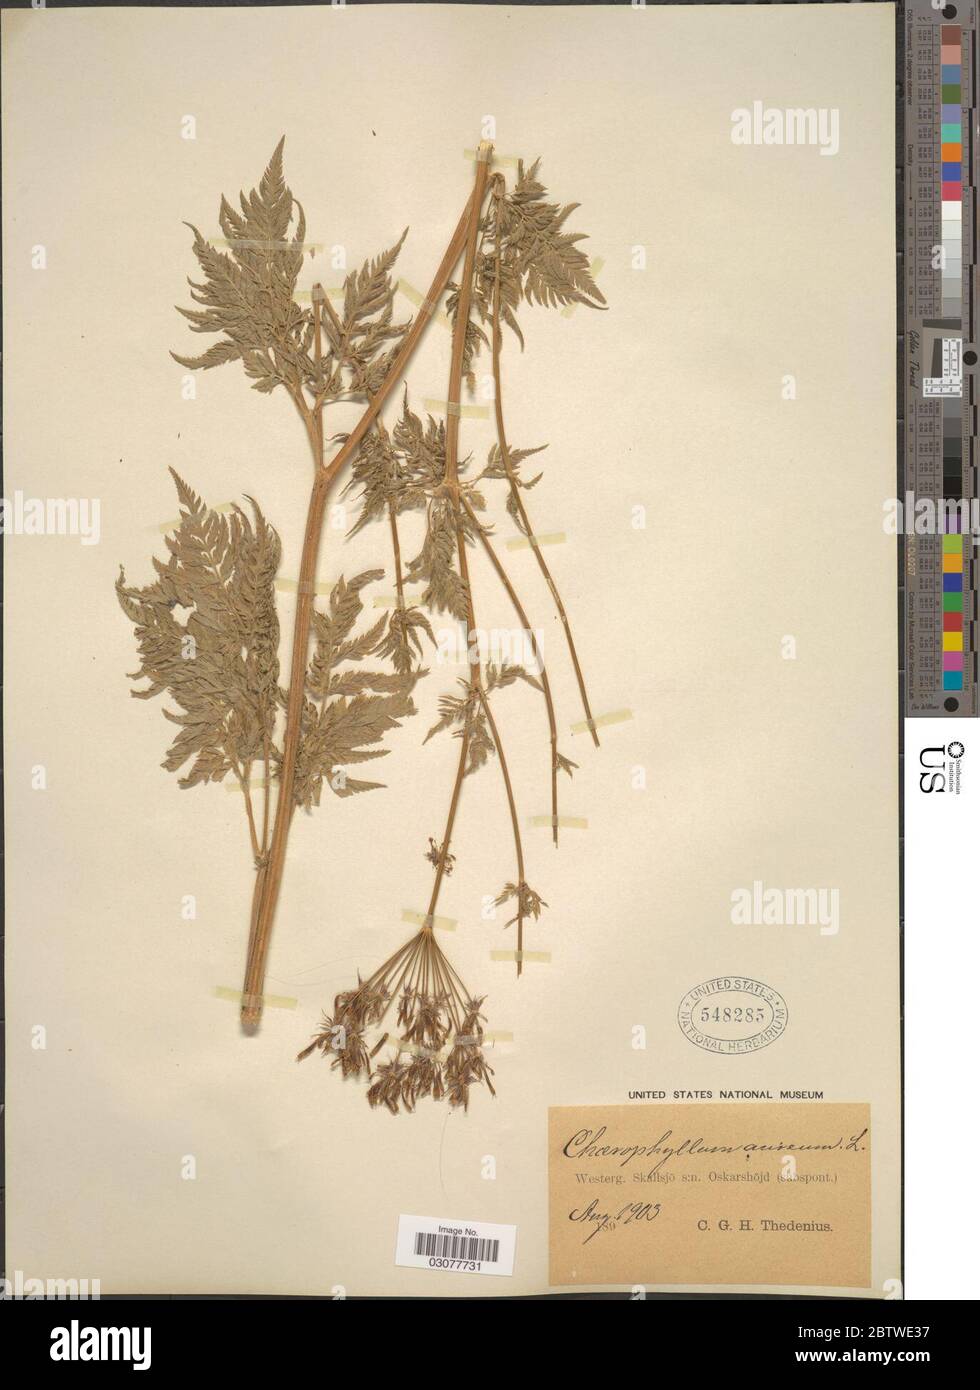 Chaerophyllum aureum L. 10 Jan 20191 Stock Photo